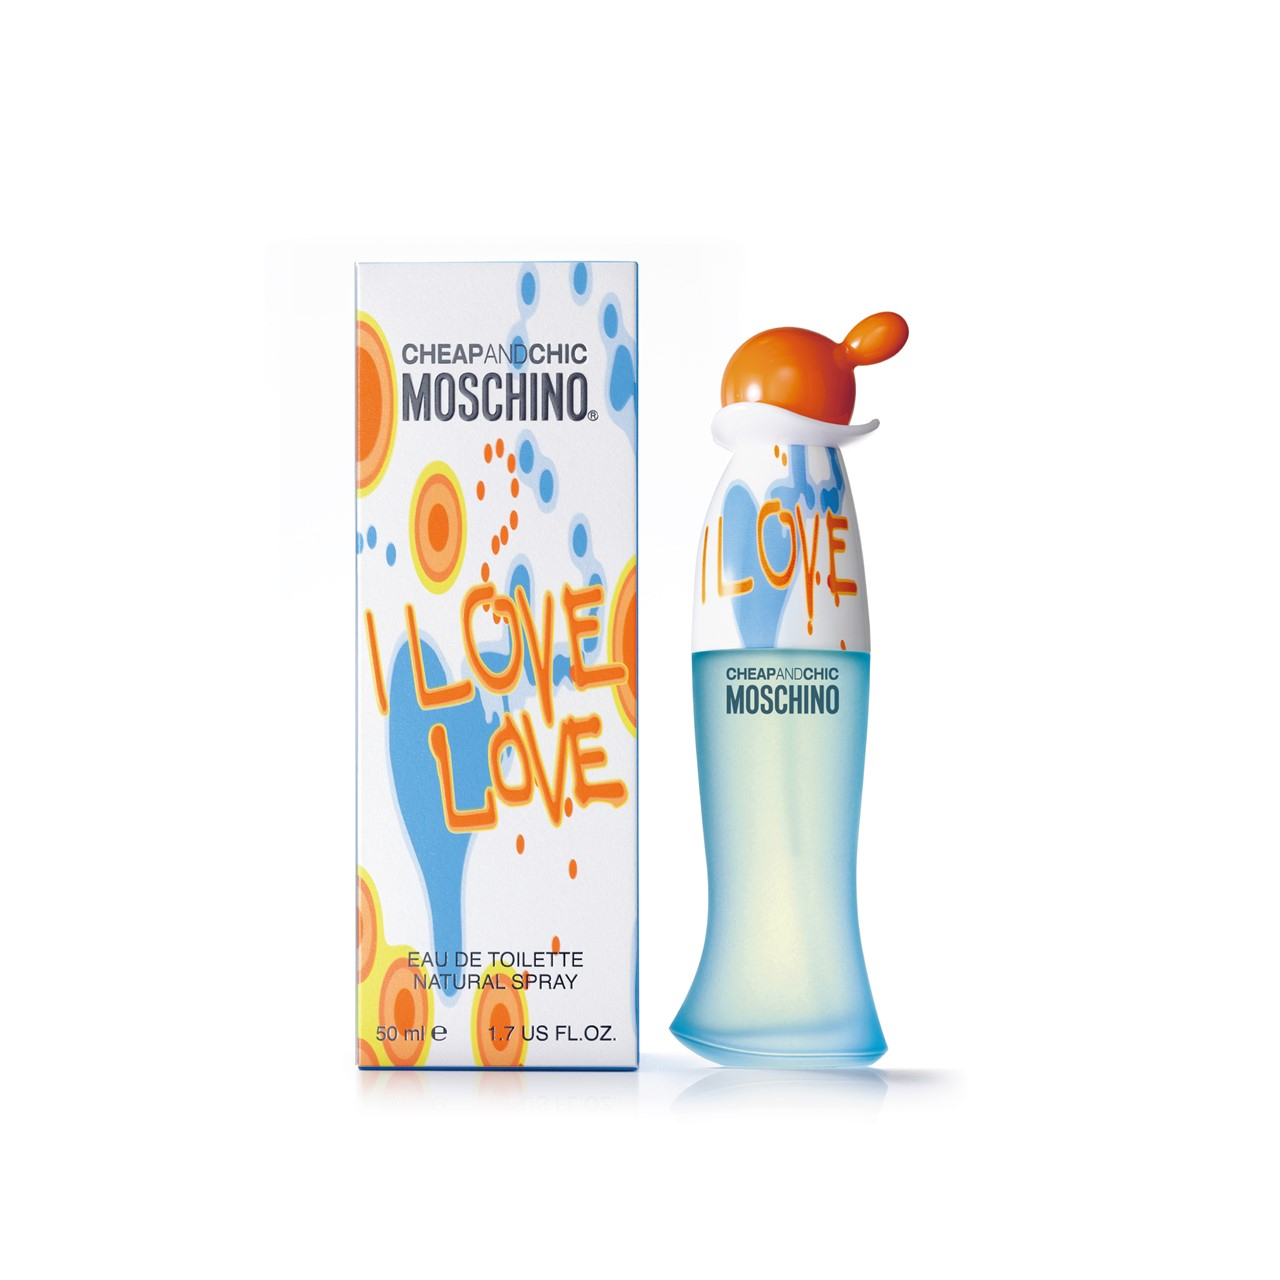 Love & Love Cheap Buy 50ml Chic · de Eau Moschino I (1.7fl.oz.) USA Toilette